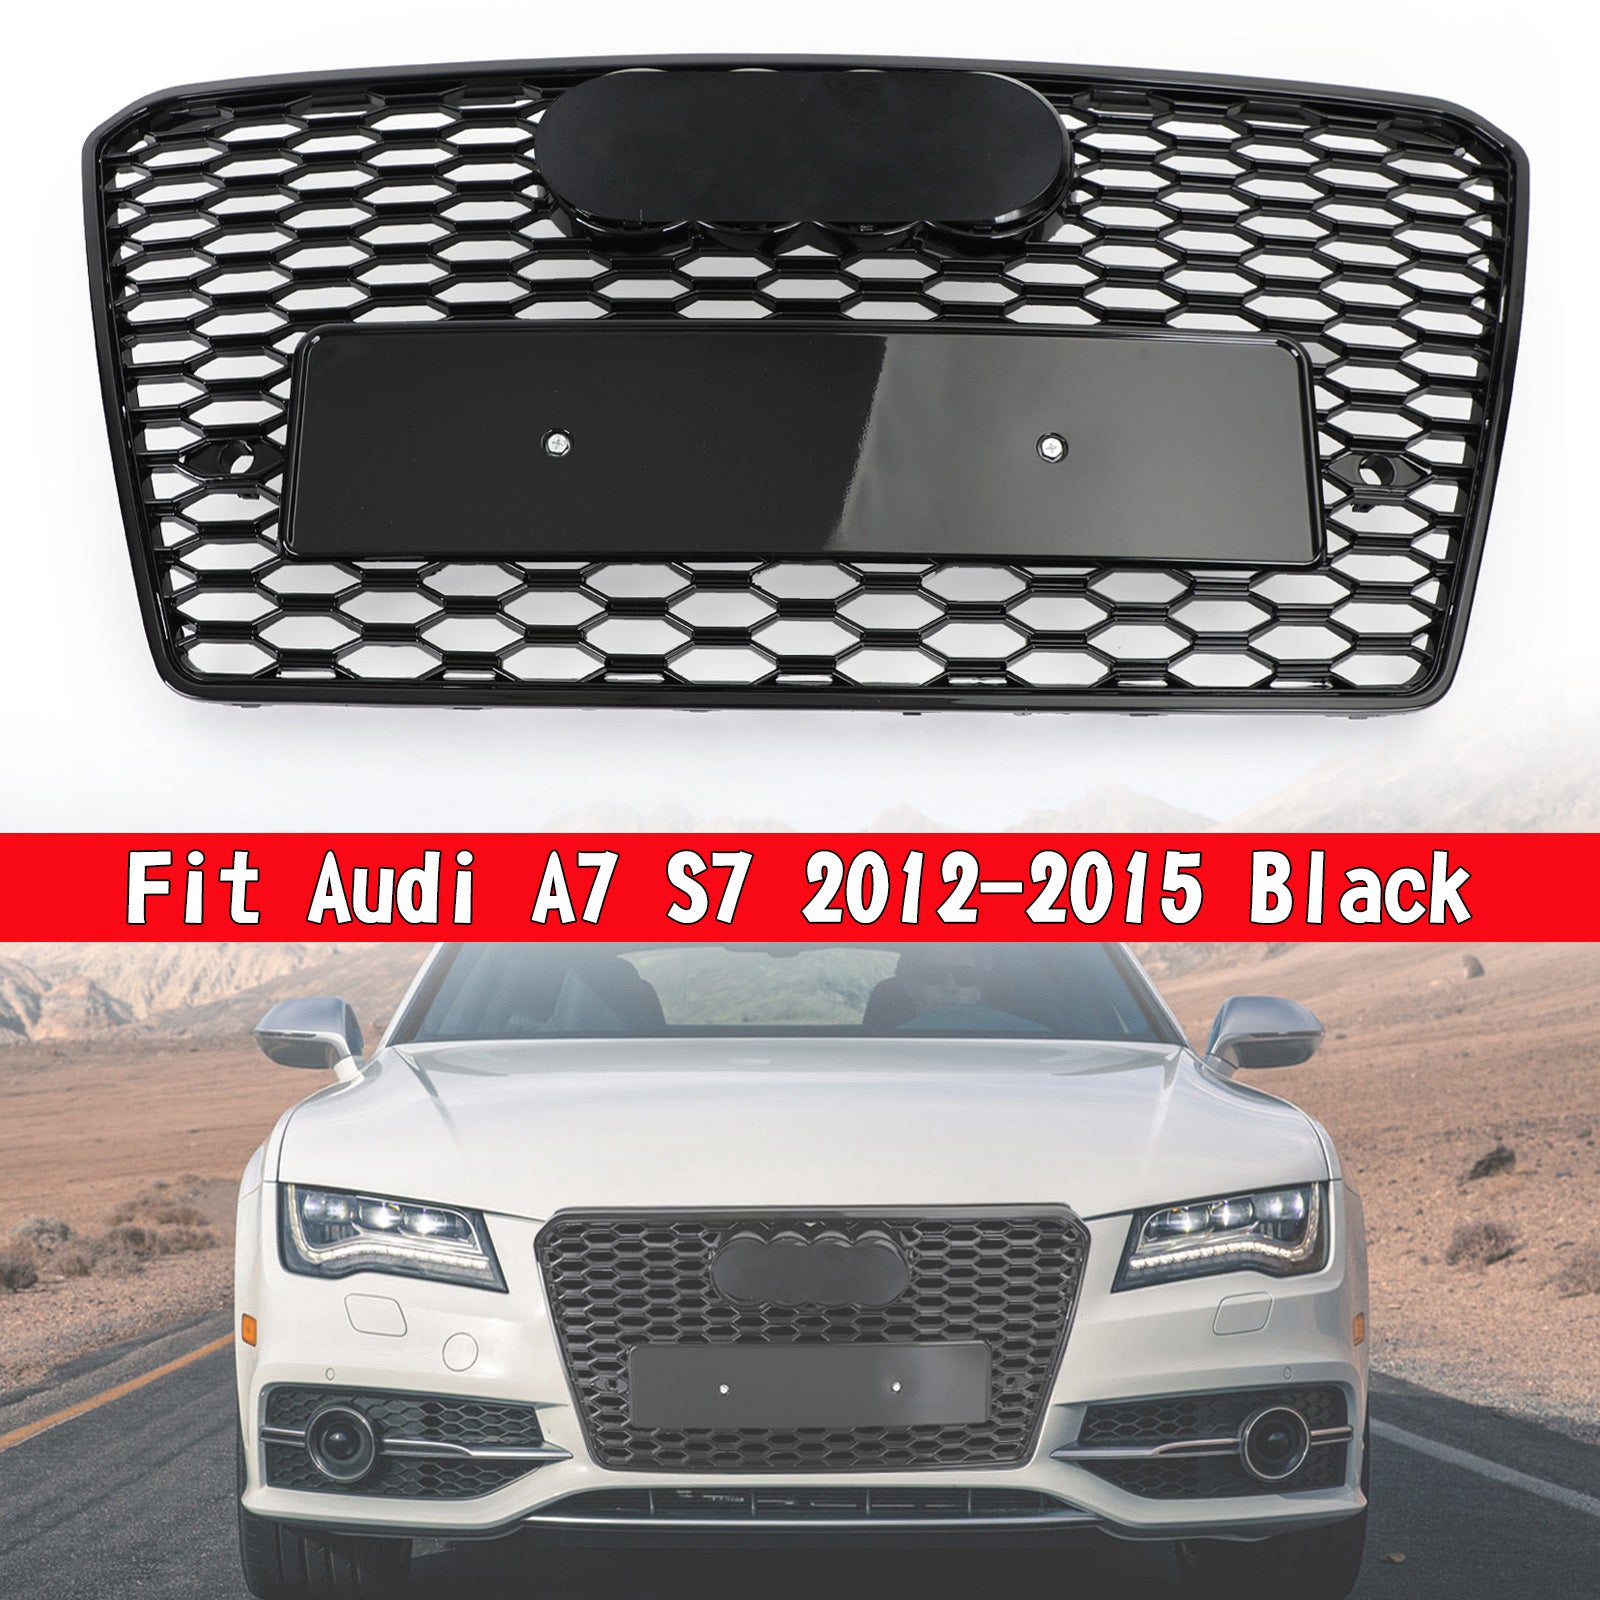 Parrilla hexagonal de malla deportiva tipo panal estilo RS7, compatible con Audi A7/S7 2012-2015, color negro